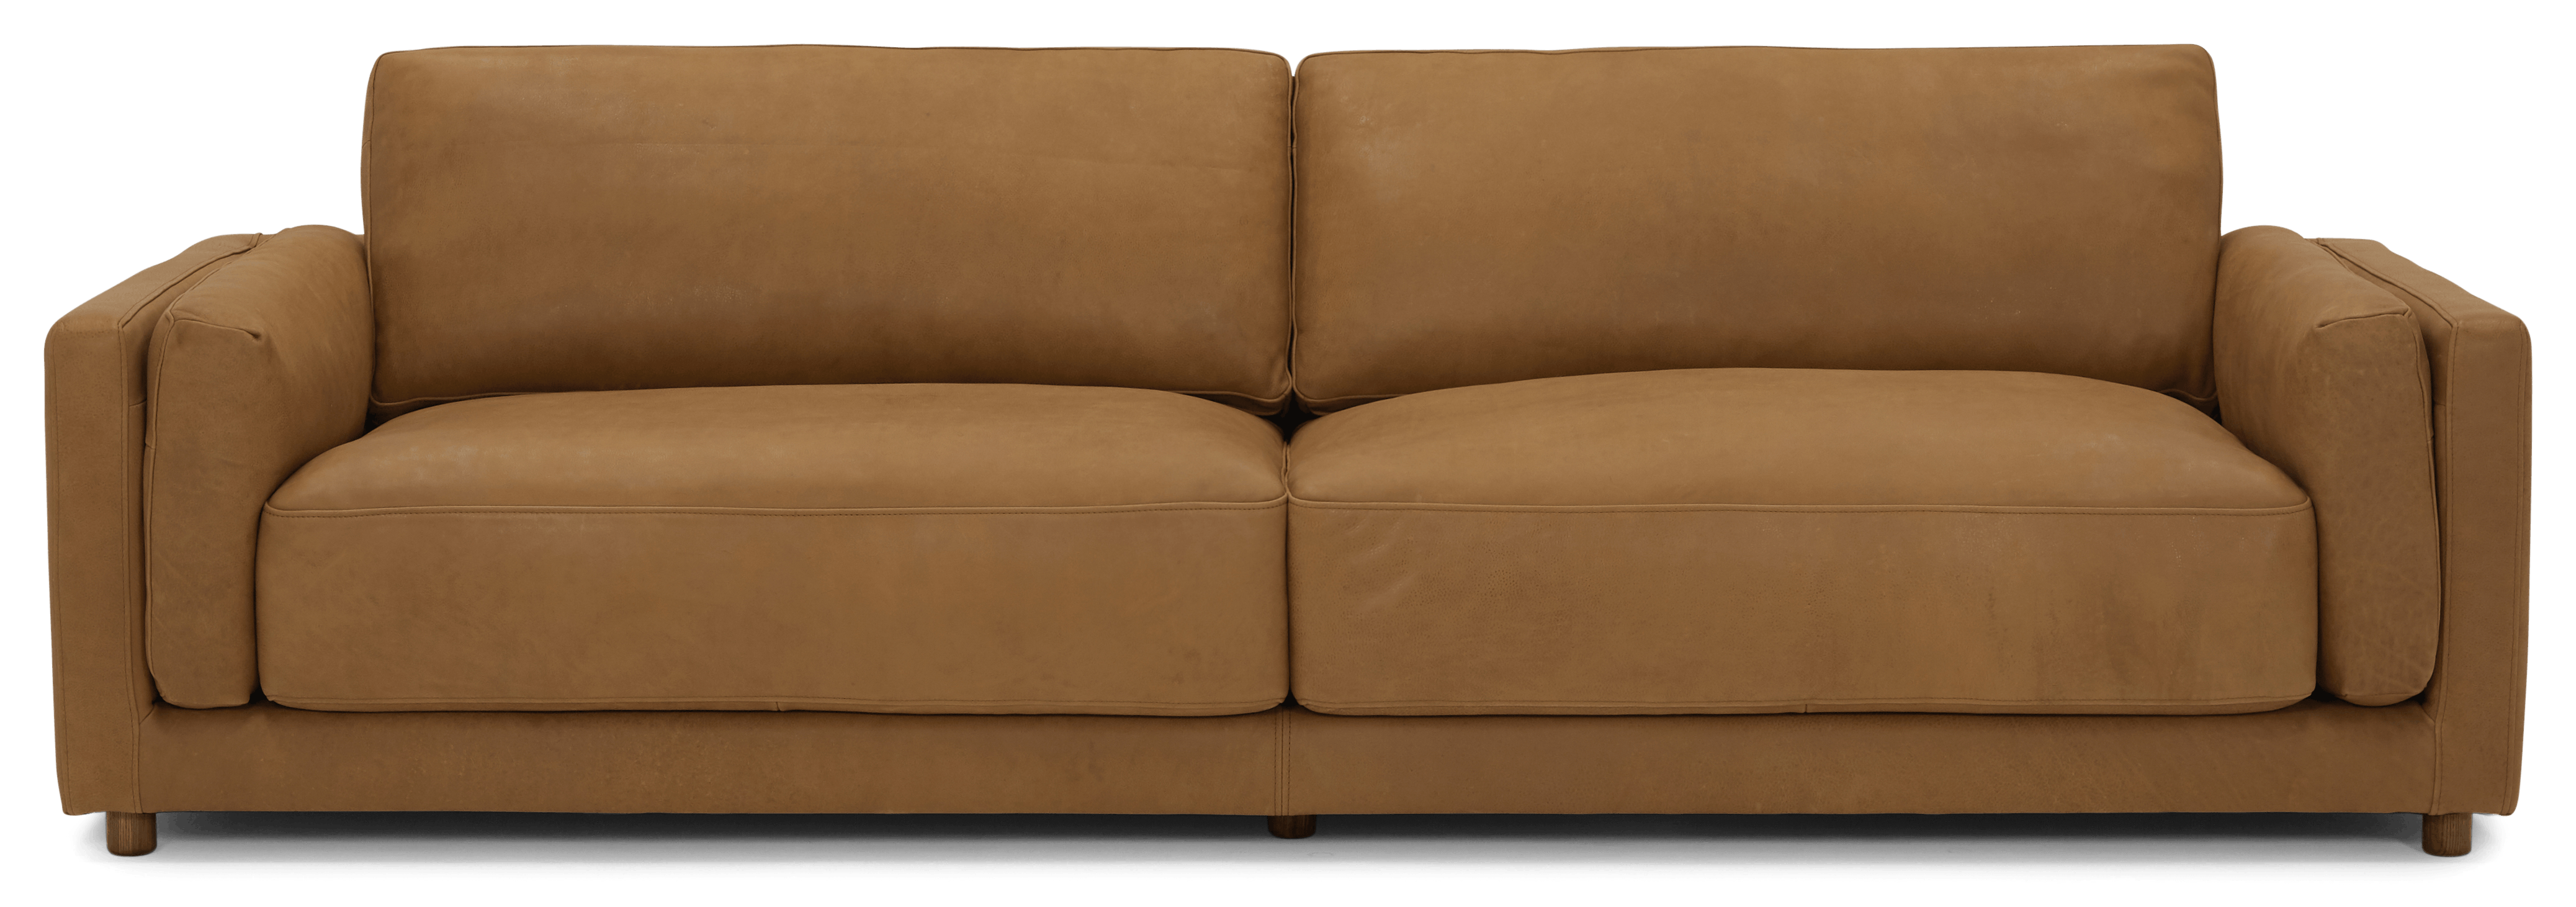 Henri Leather Sofa